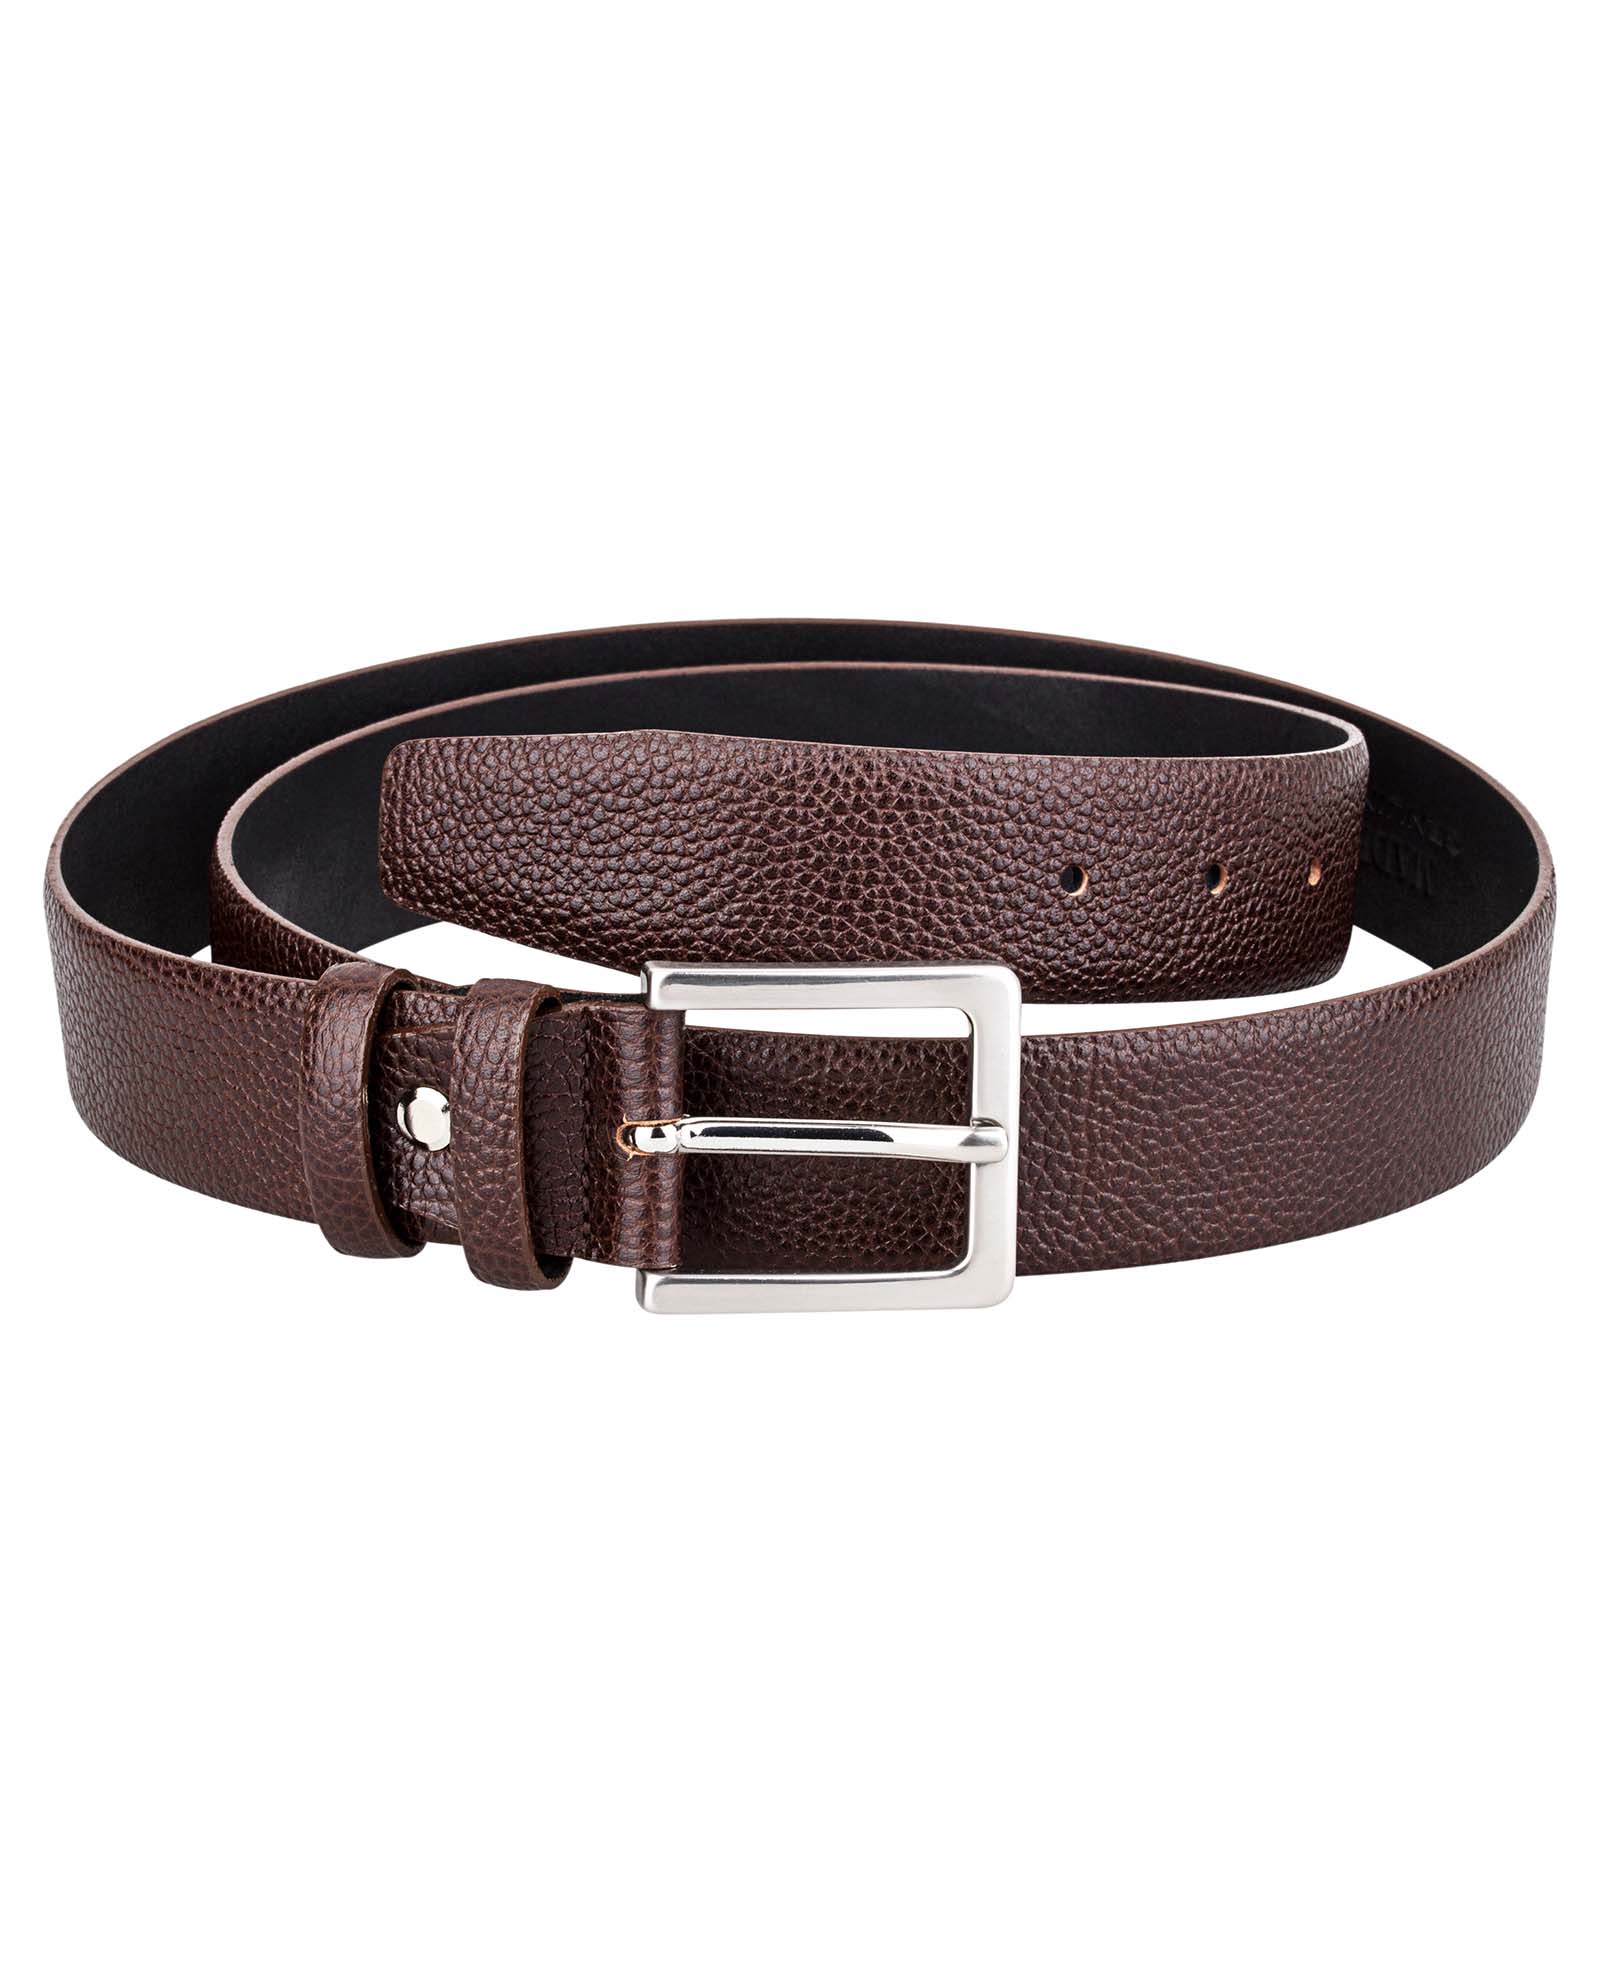 Buy Mens Belt Brown - Italian Leather - www.bagssaleusa.com